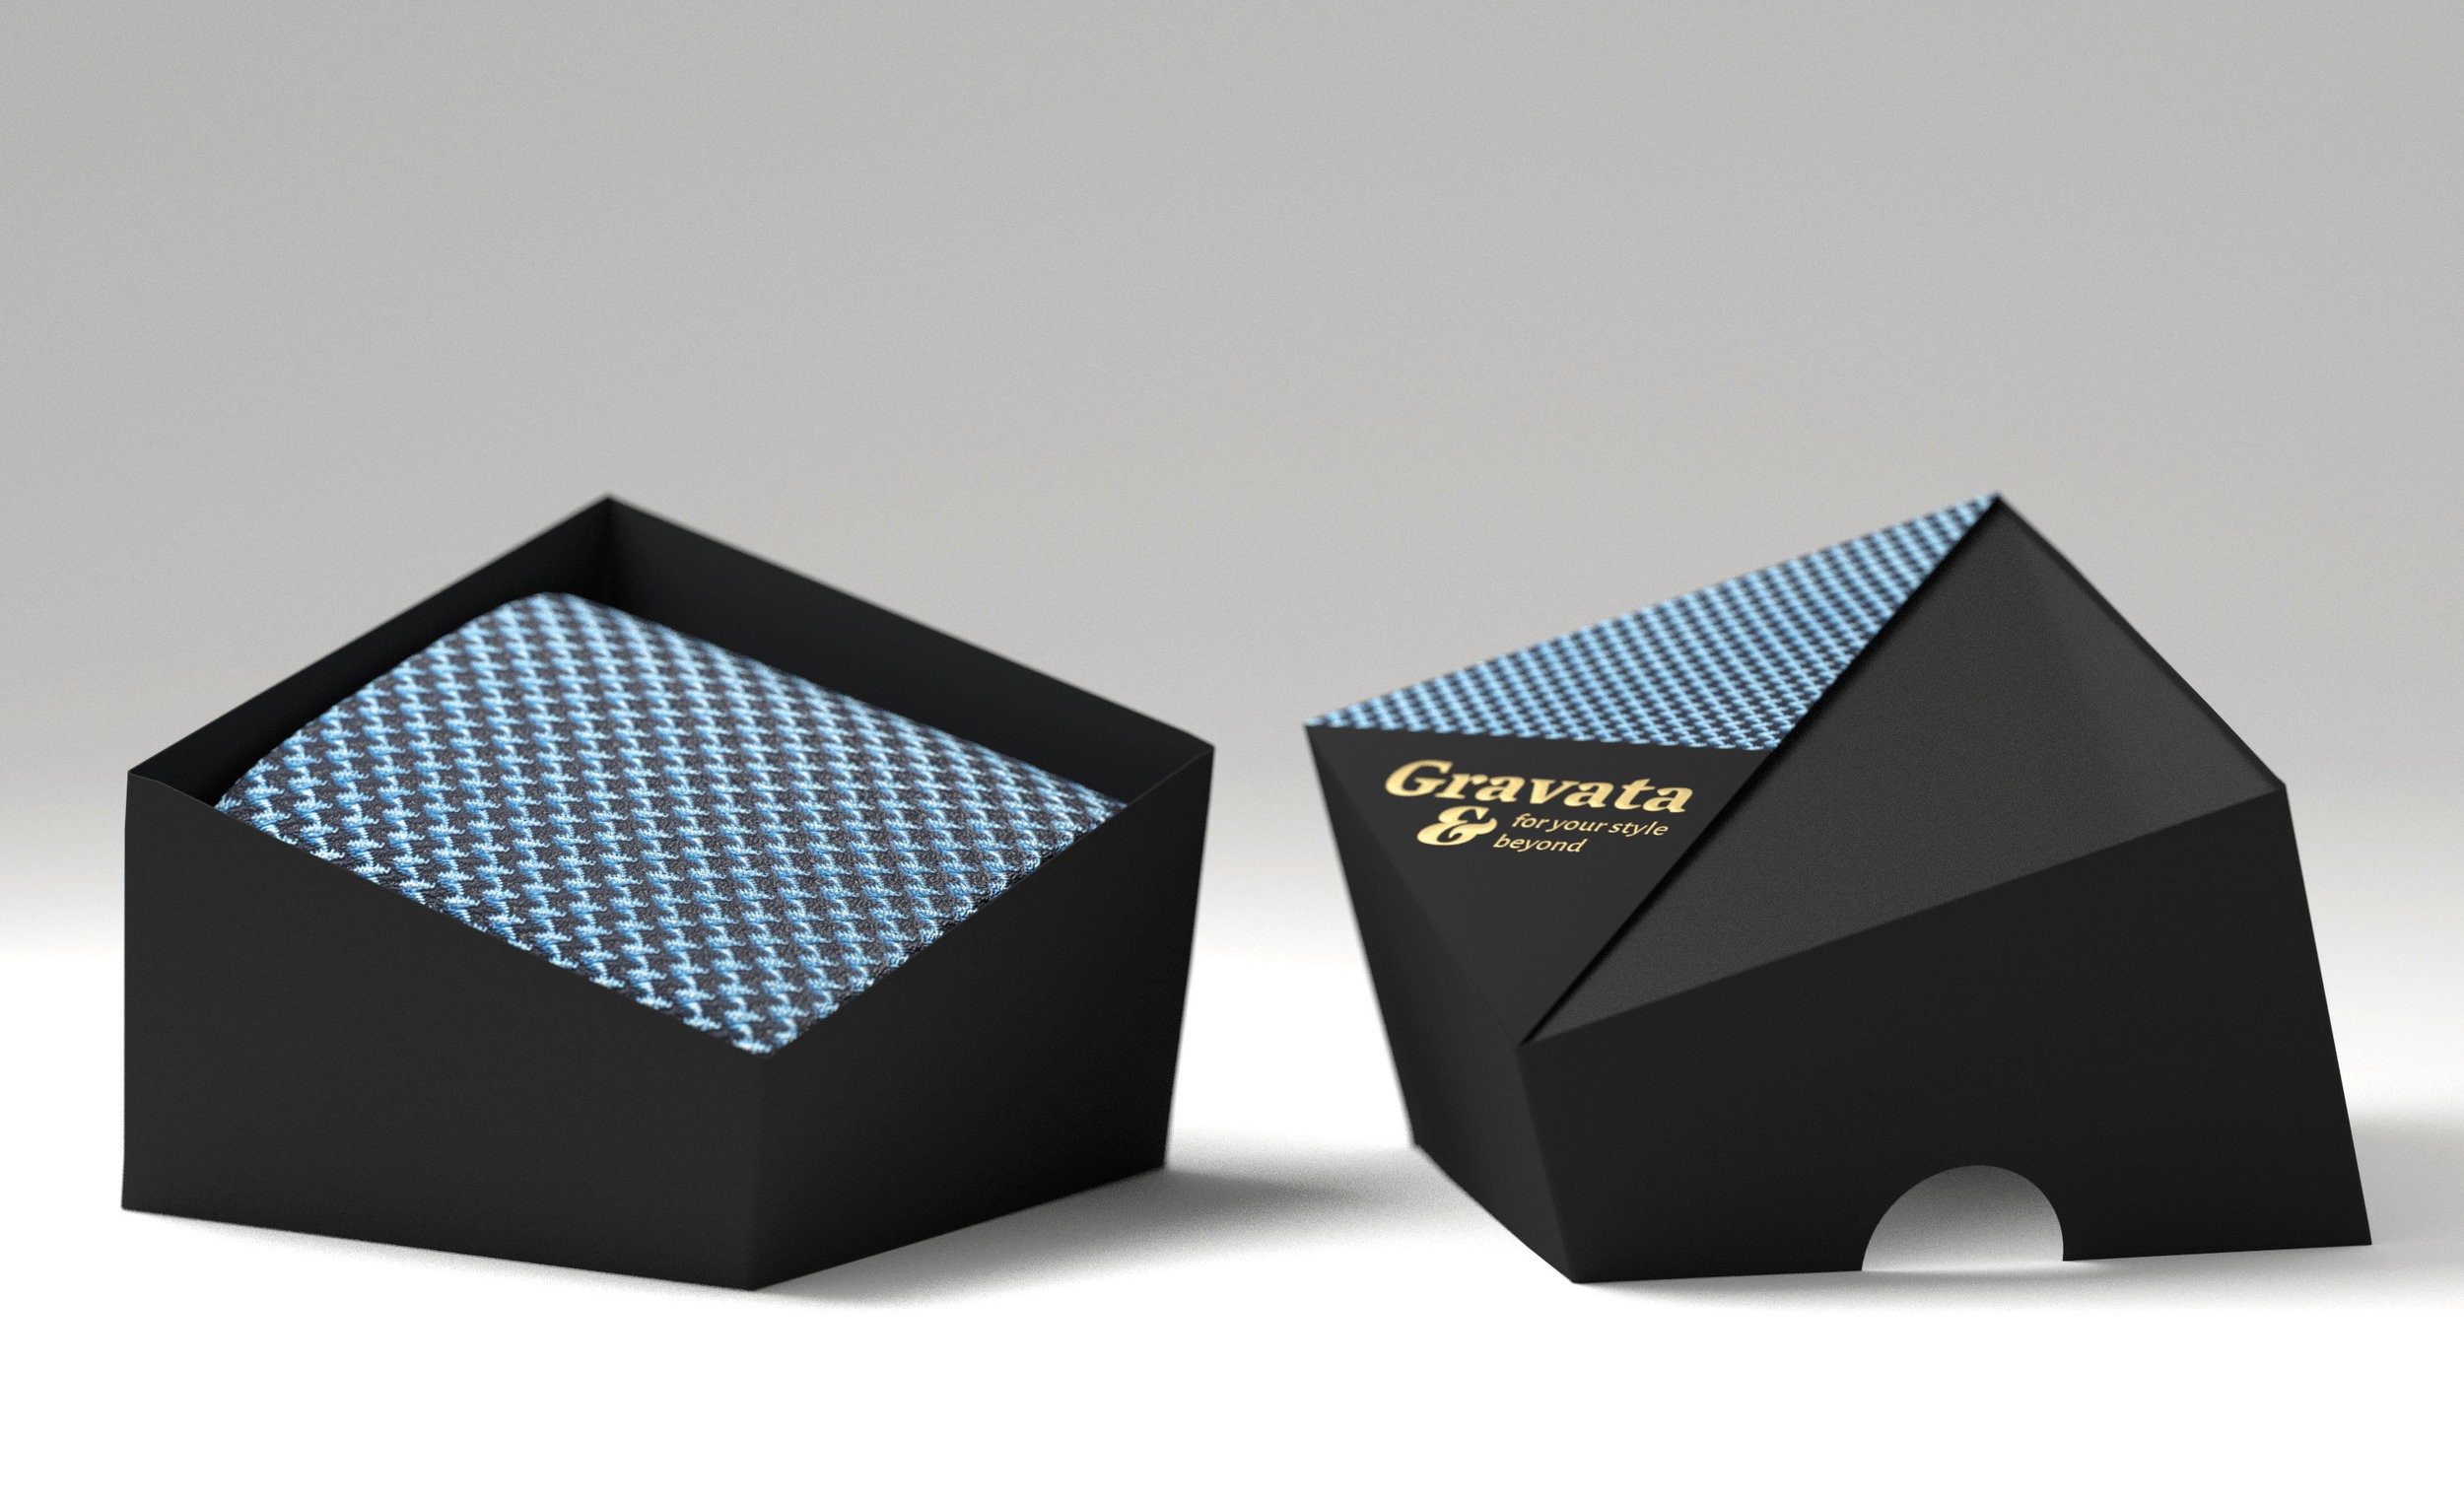 Necktie Brand and Packaging Design Concept